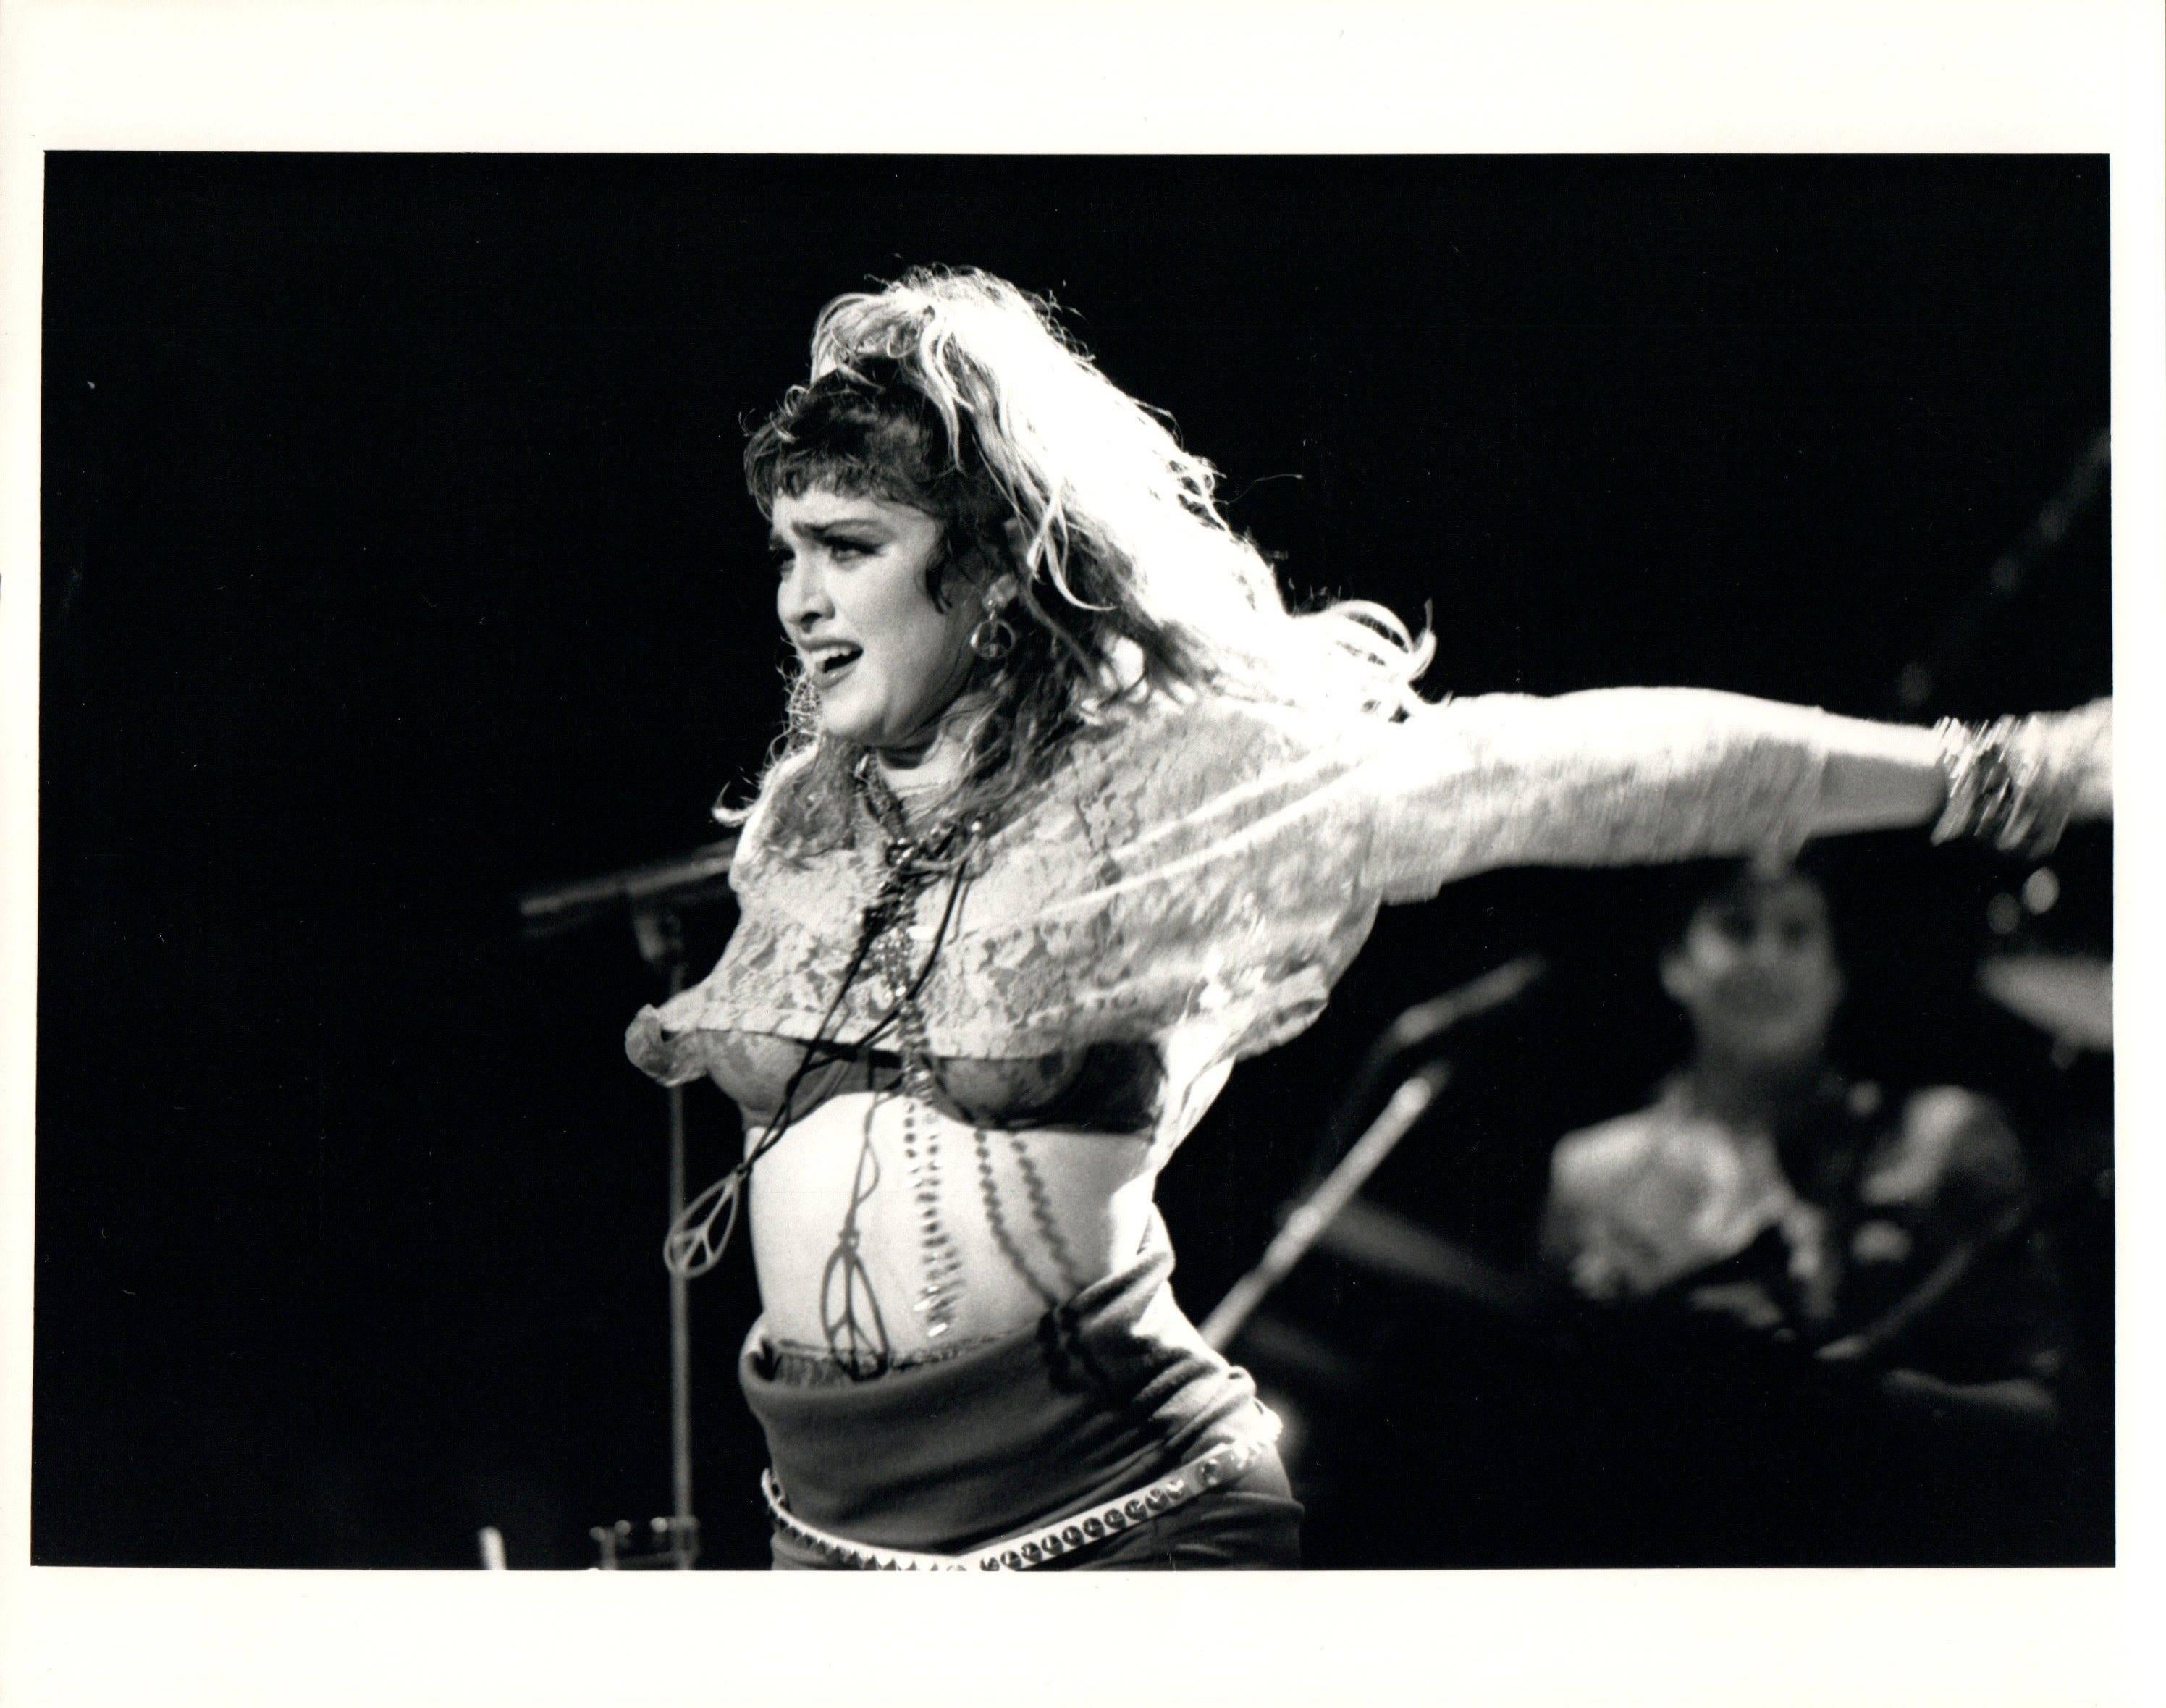 Eddie Malluk Portrait Photograph - Madonna Performing on Stage Vintage Original Photograph